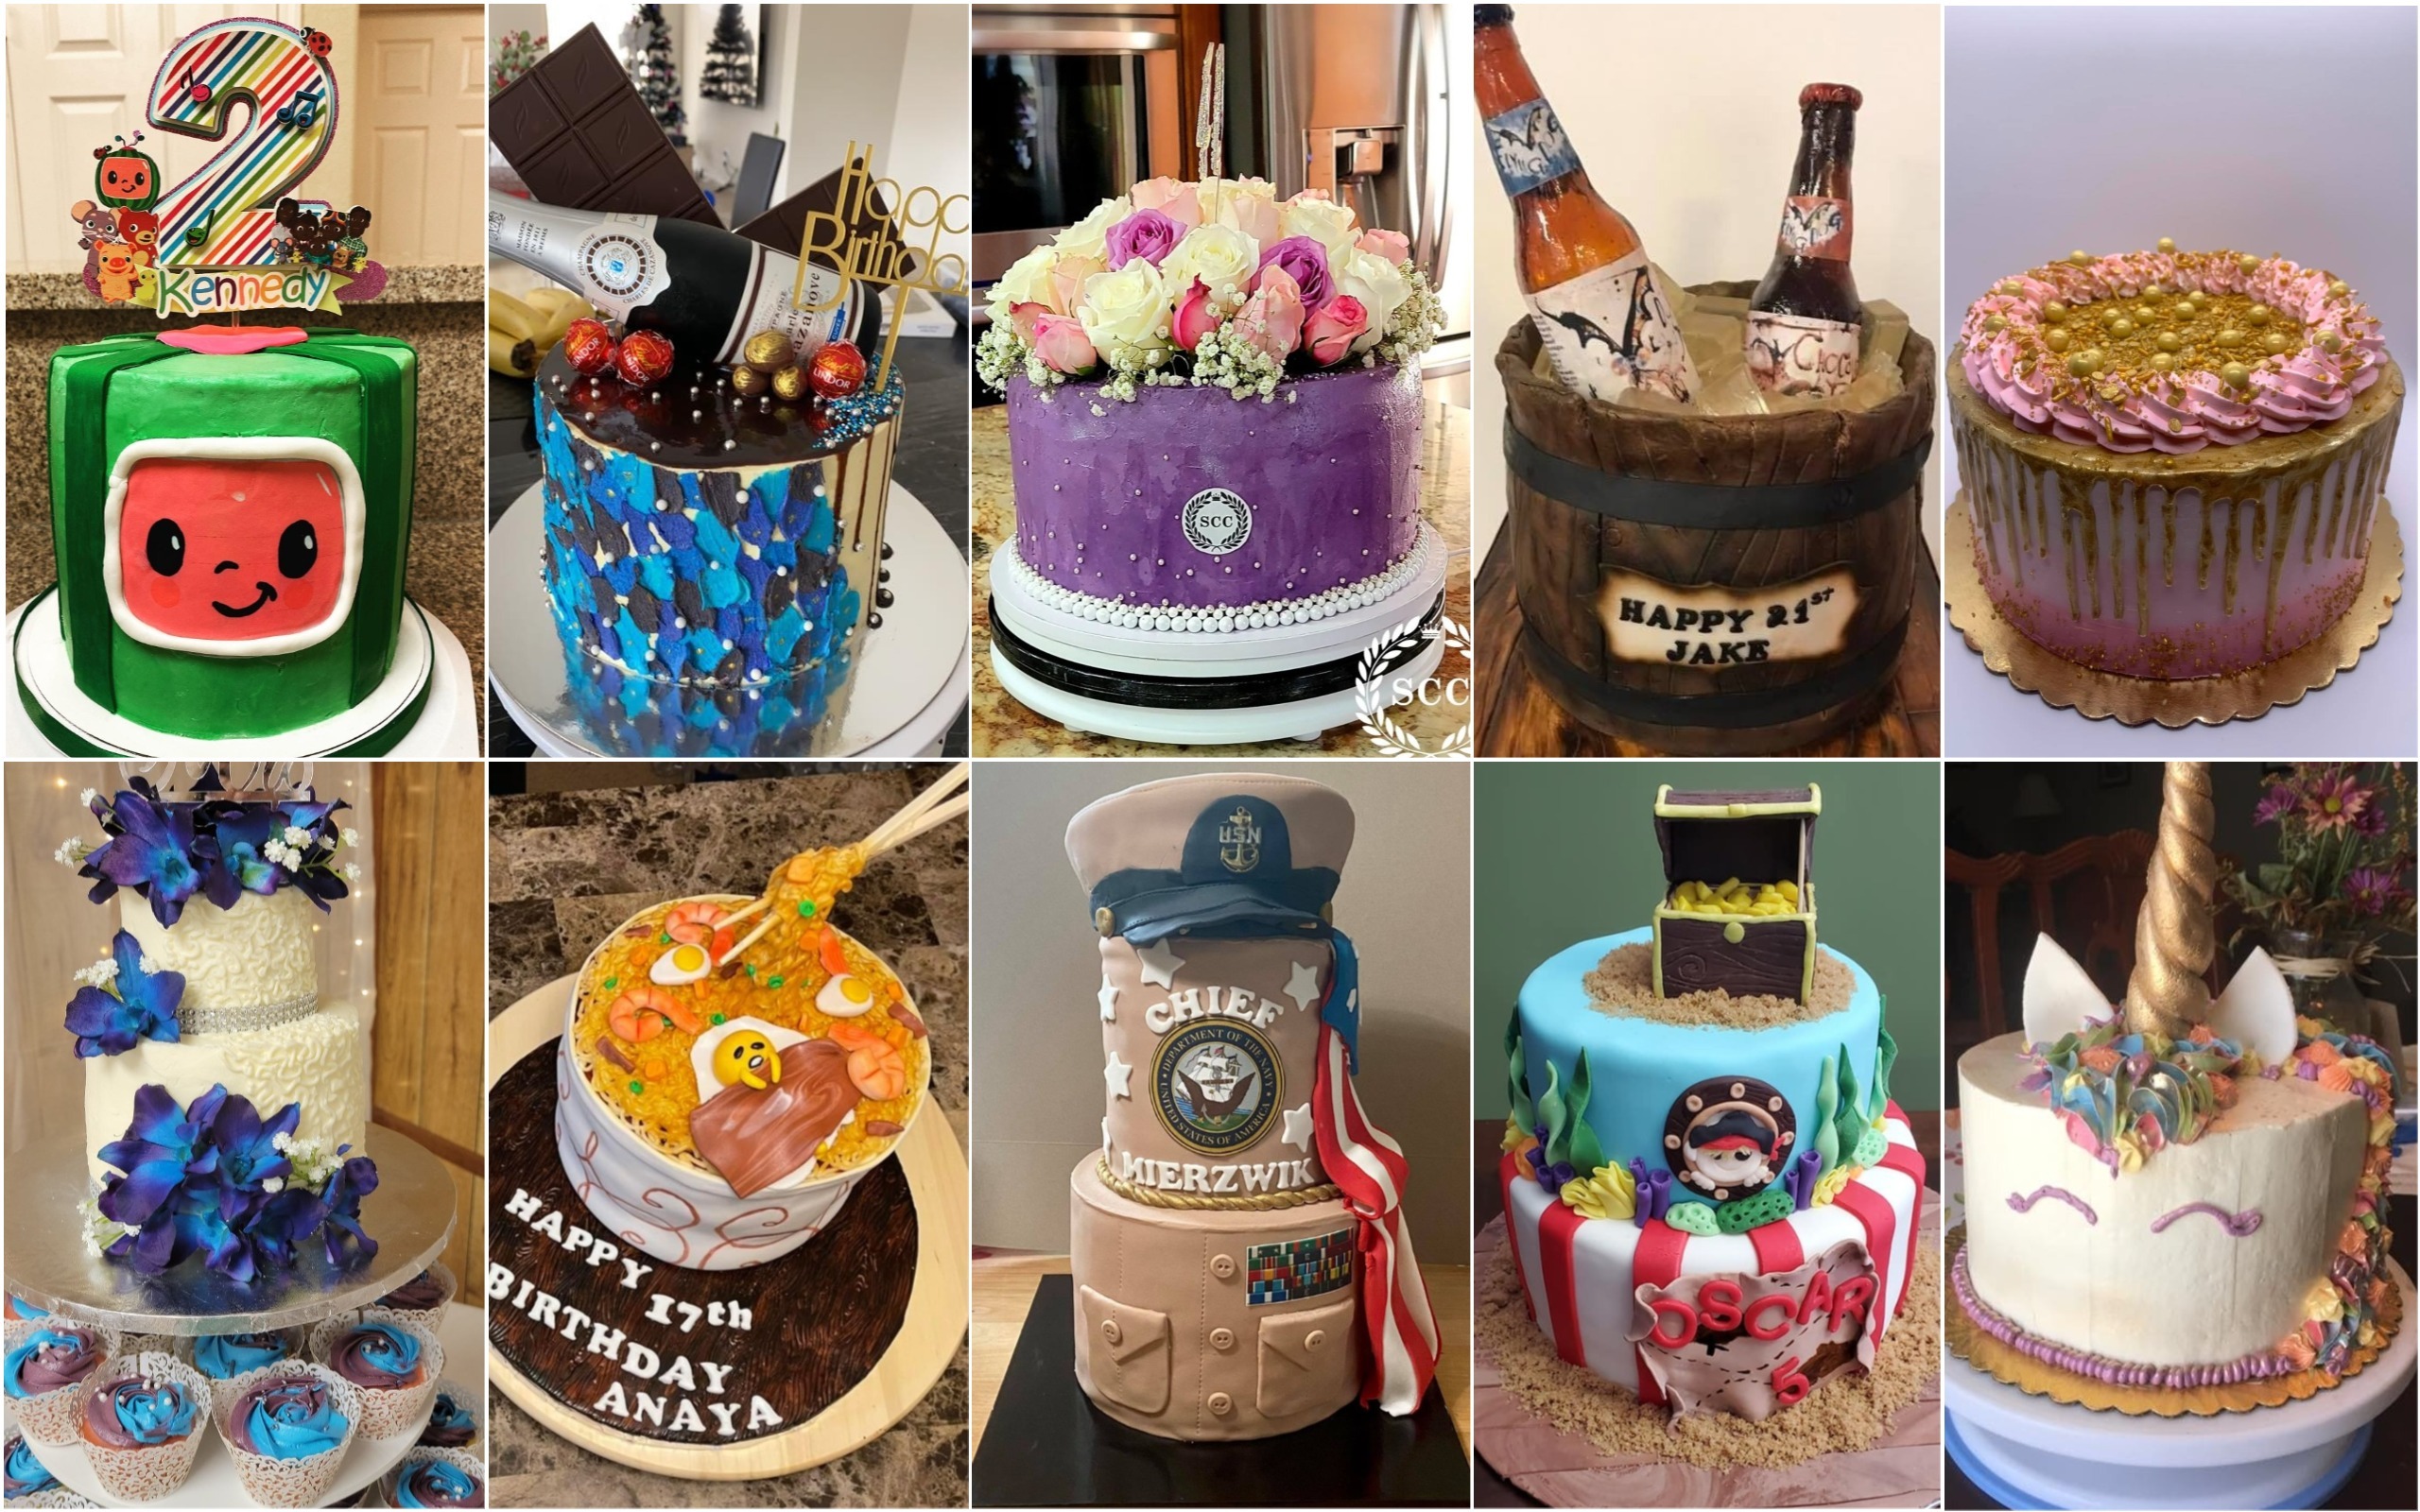 Fun cake ideas, best cake decorating ideas, best cake recipes for birthday